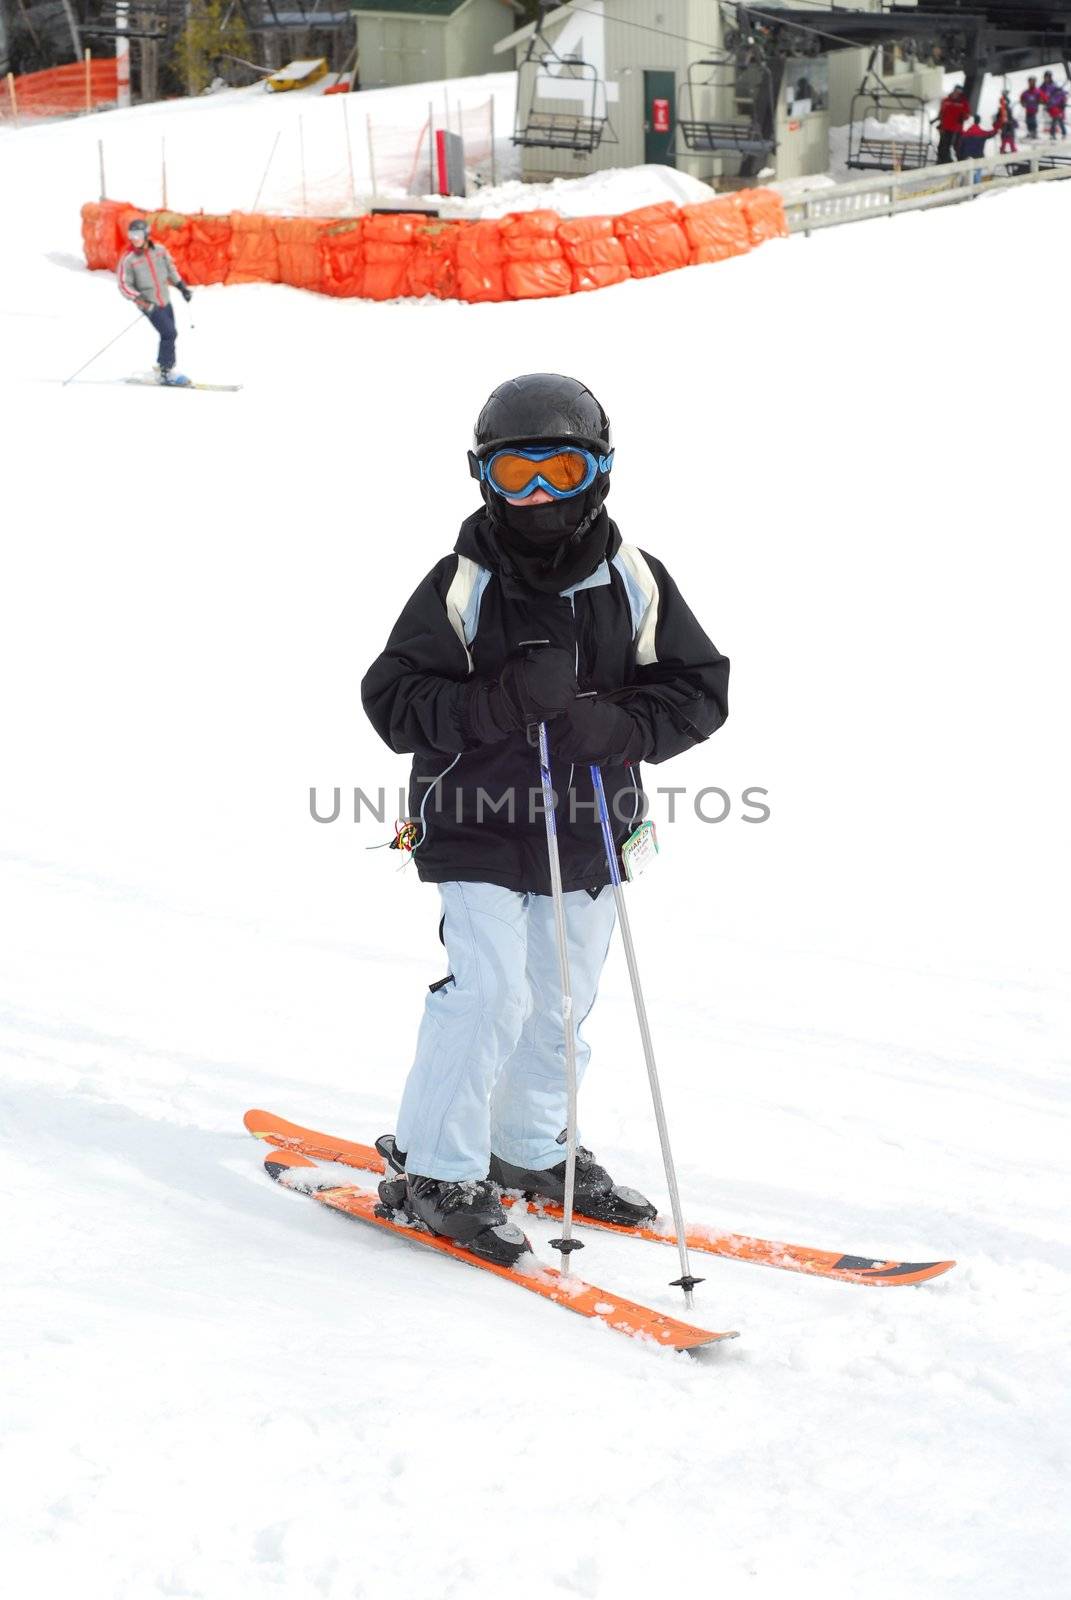 Child downhill ski by elenathewise